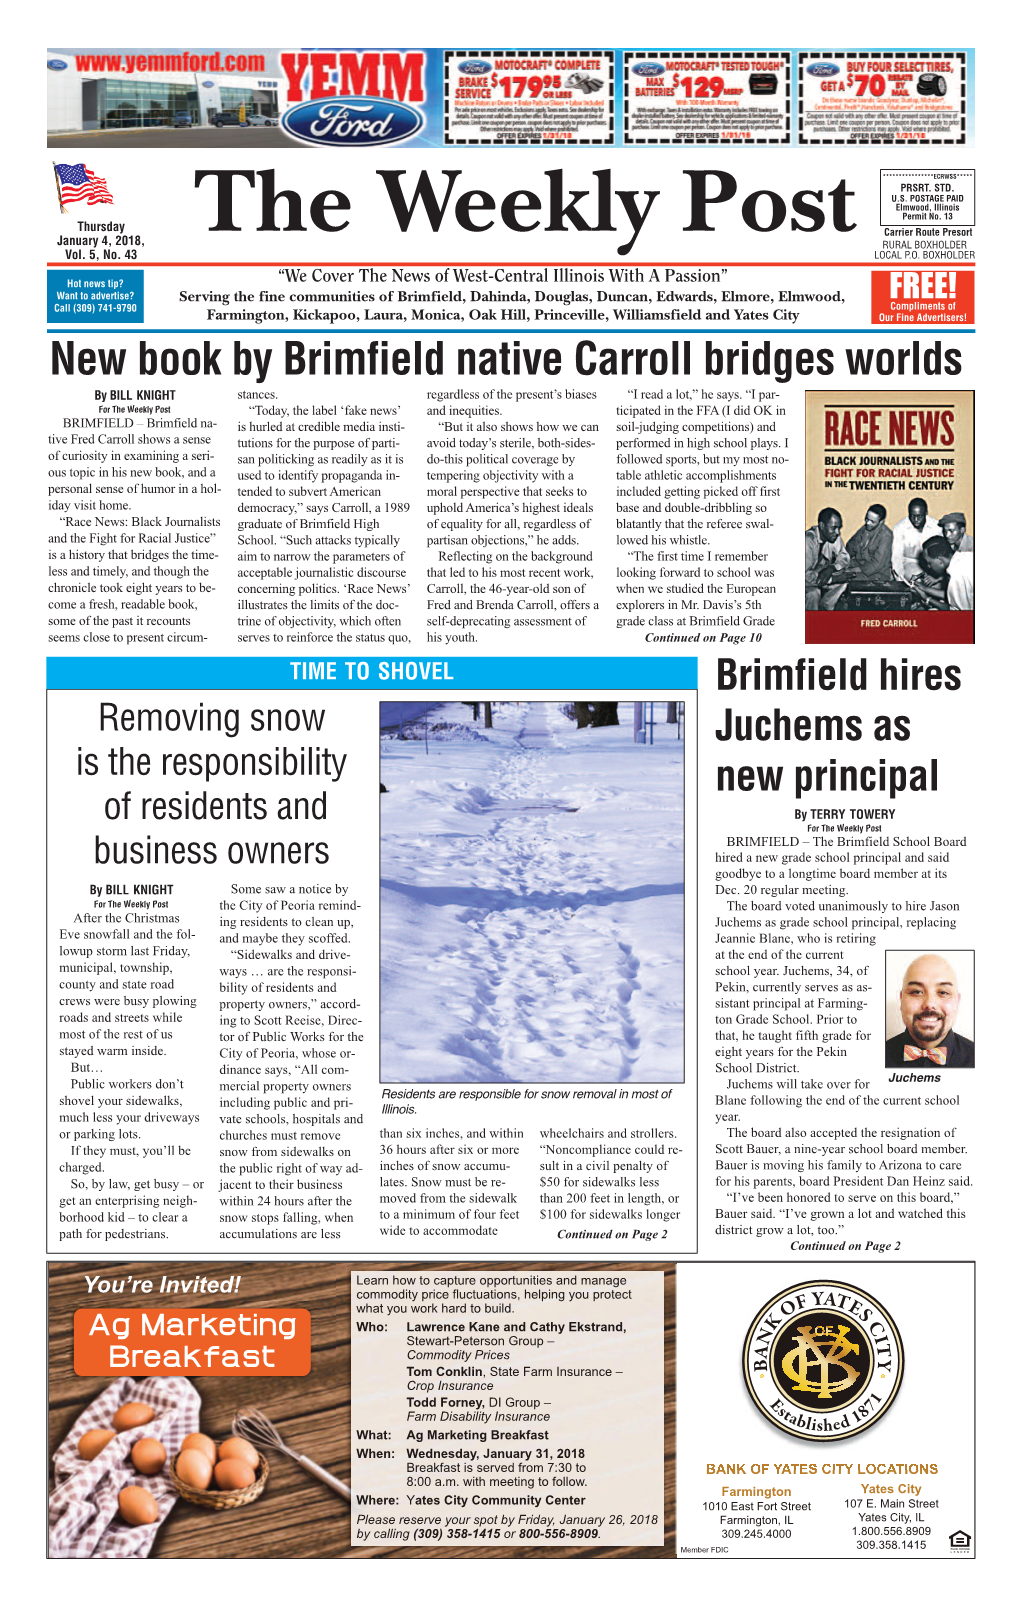 New Book by Brimfield Native Carroll Bridges Worlds